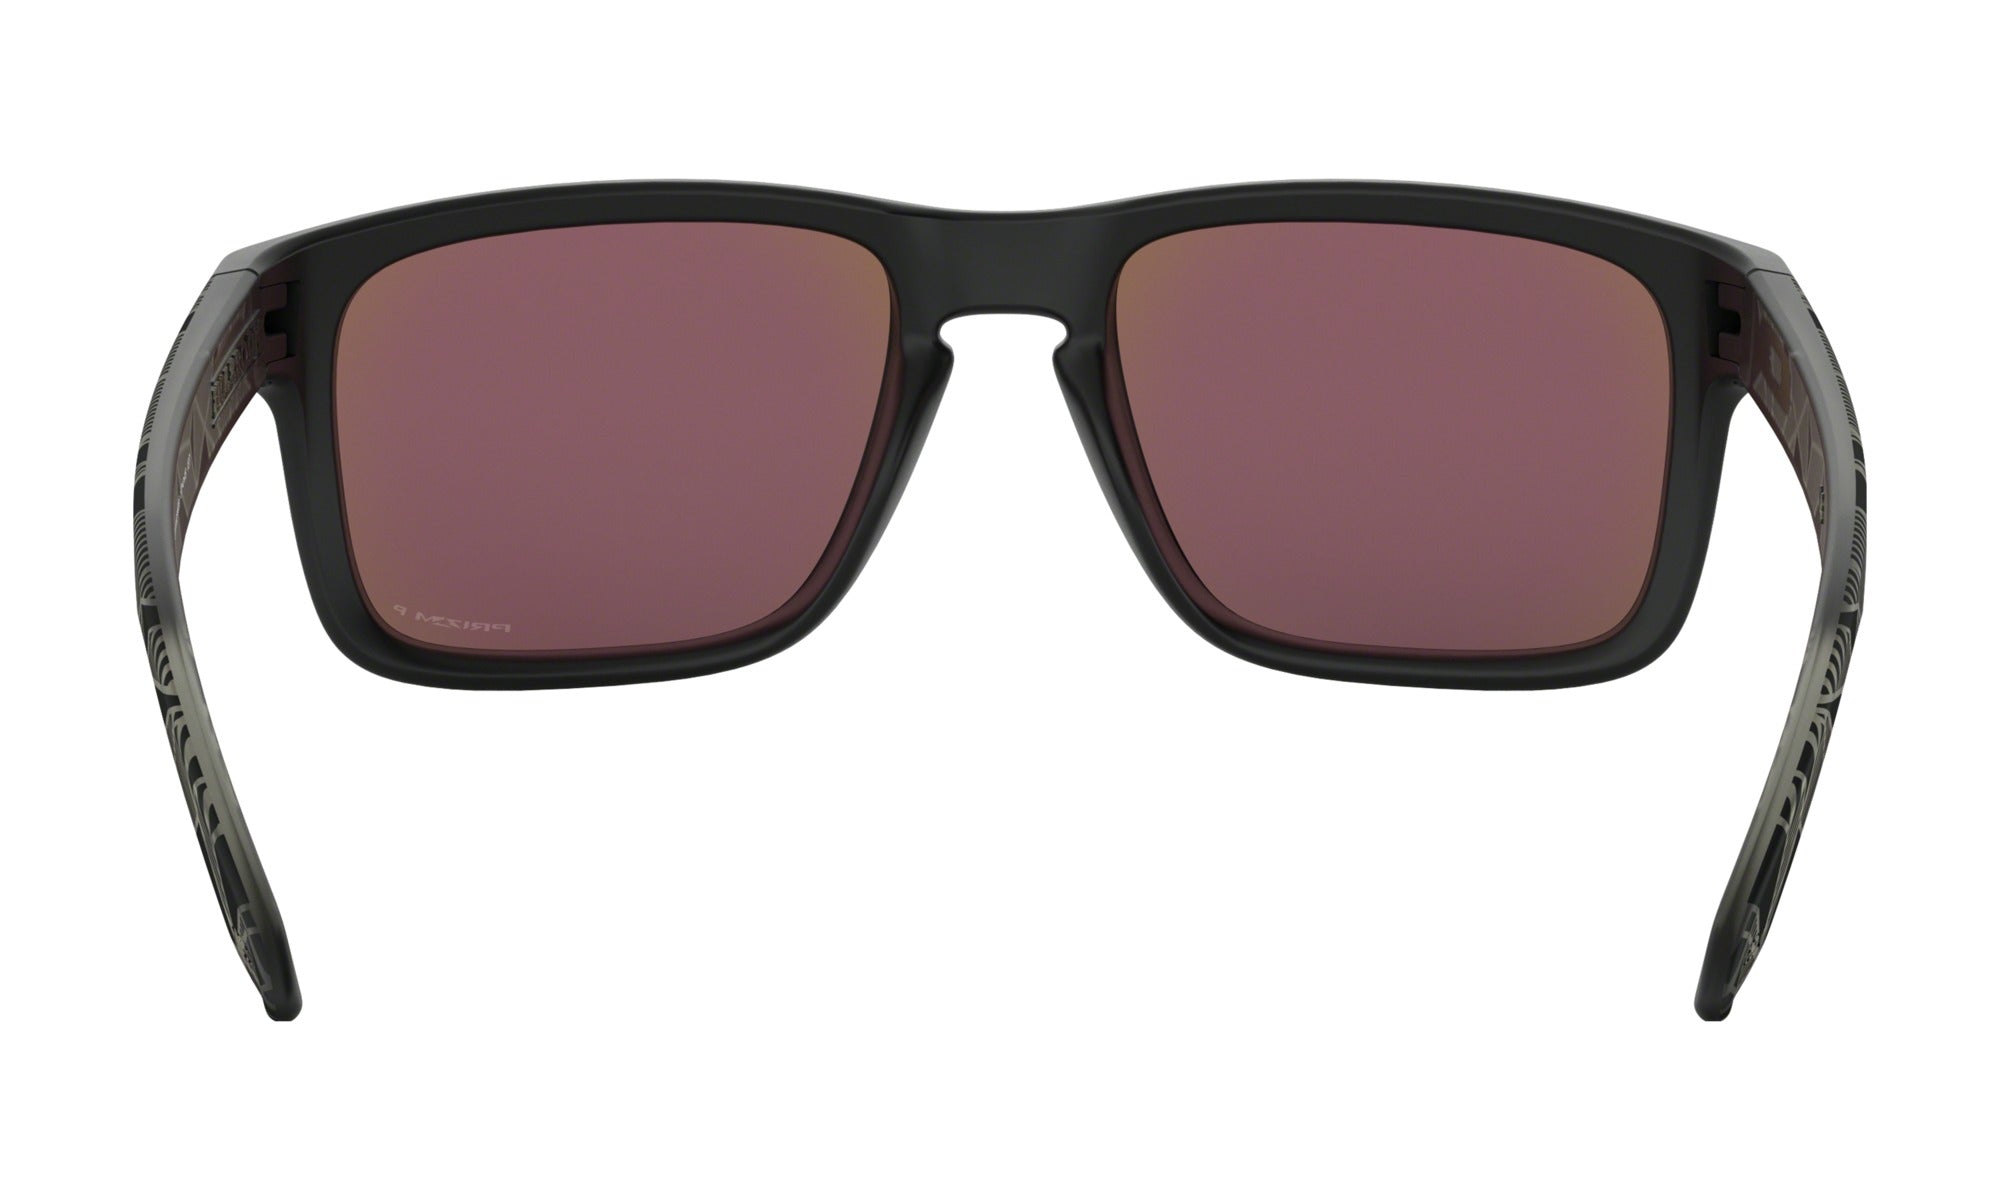 Oakley Holbrook Matte Black Sapphire Sunglasses